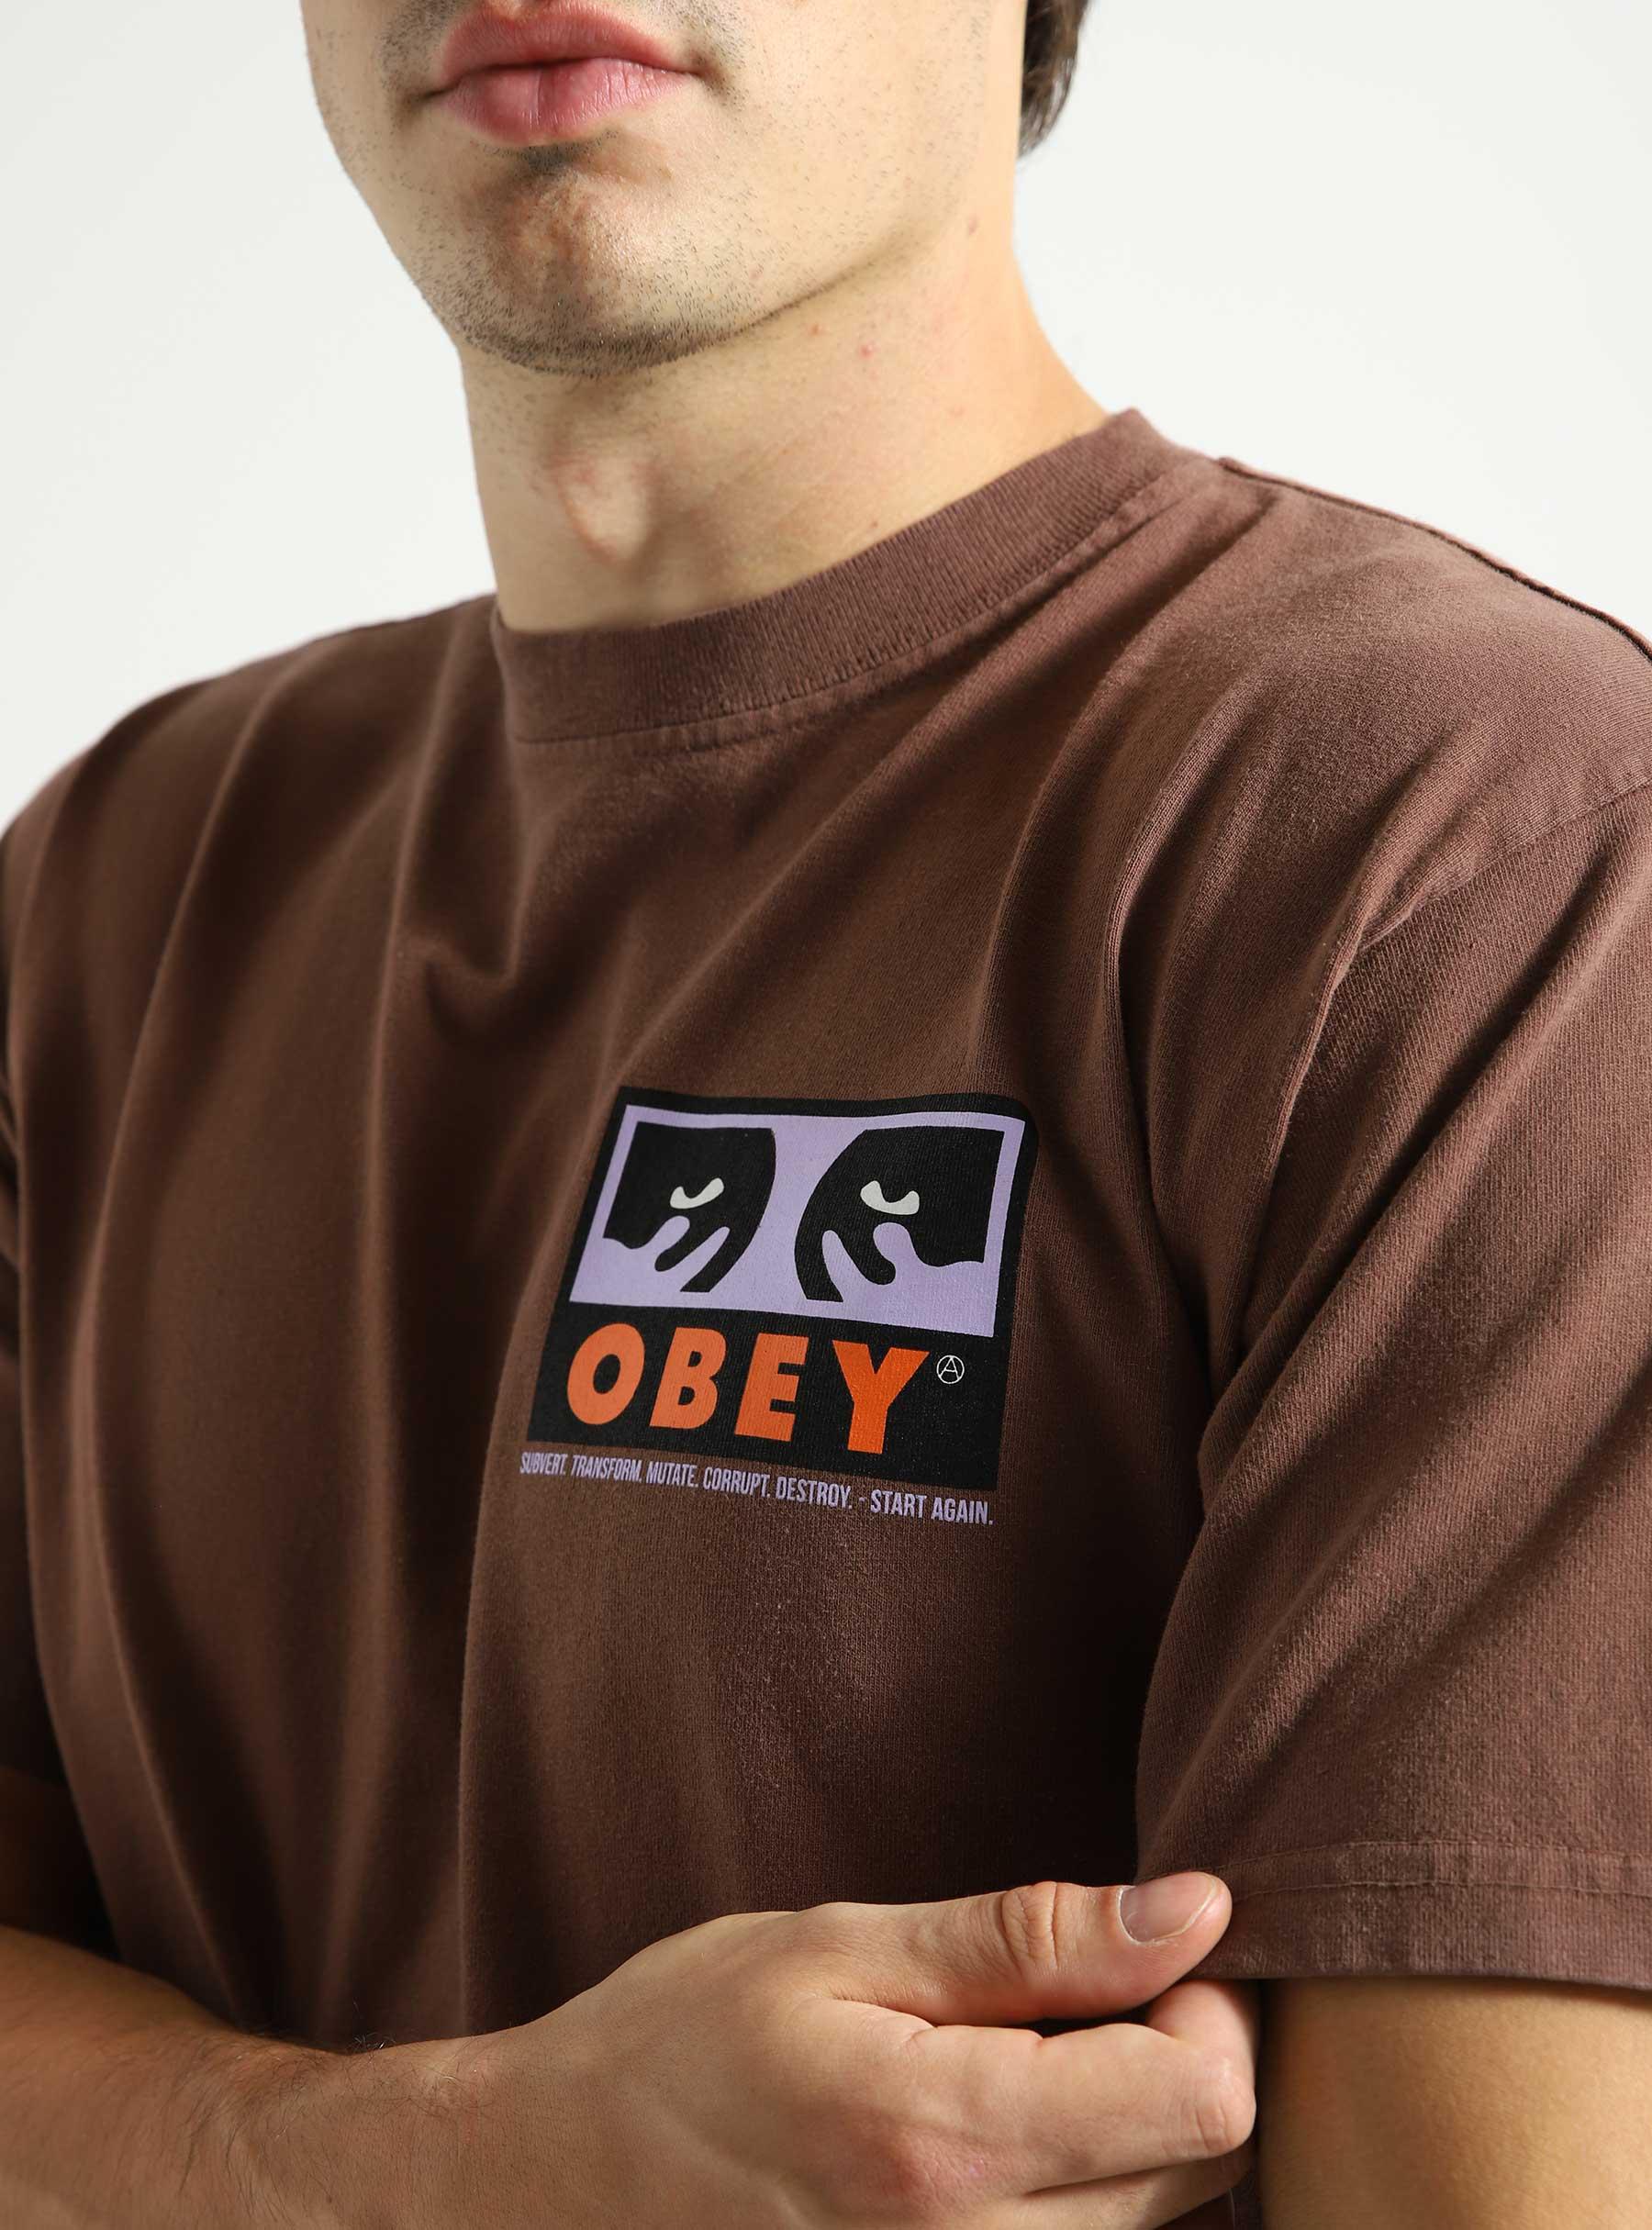 Obey Subvert T-shirt Sepia 166913576-SEP